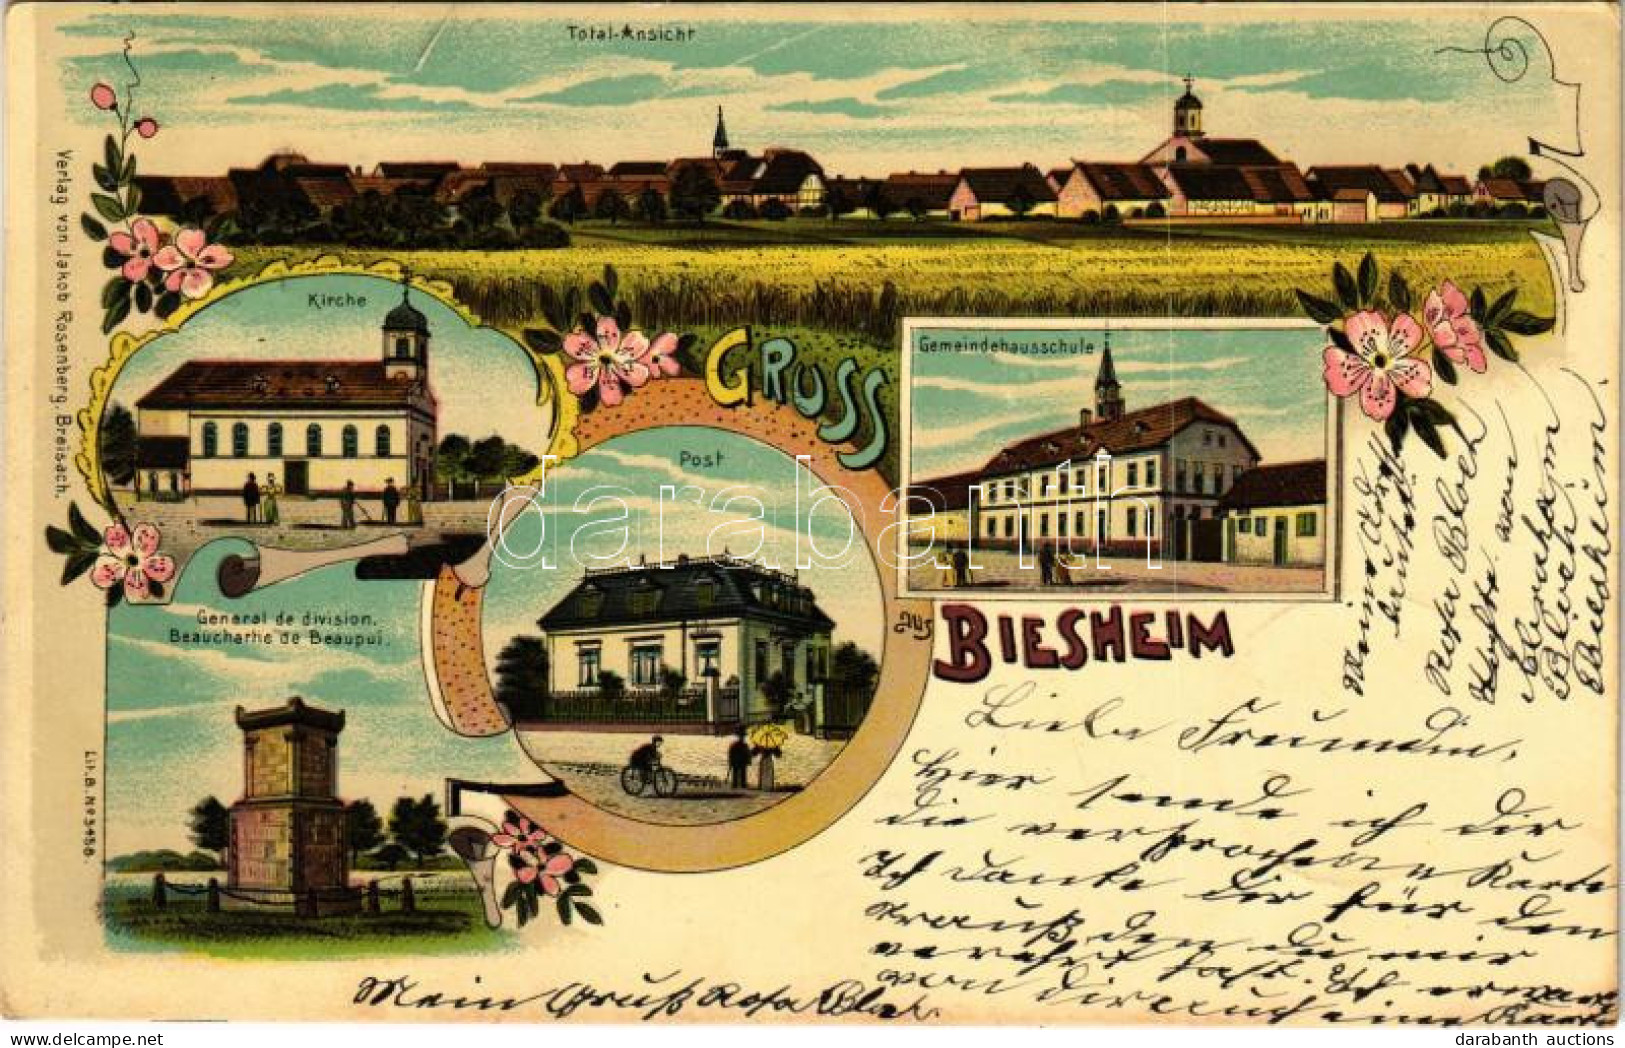 T2/T3 1903 Biesheim, Biese; General De Division. Beauchartie De Beaupui, Kirche, Post, Total Ansicht, Gemeindehausschule - Non Classés